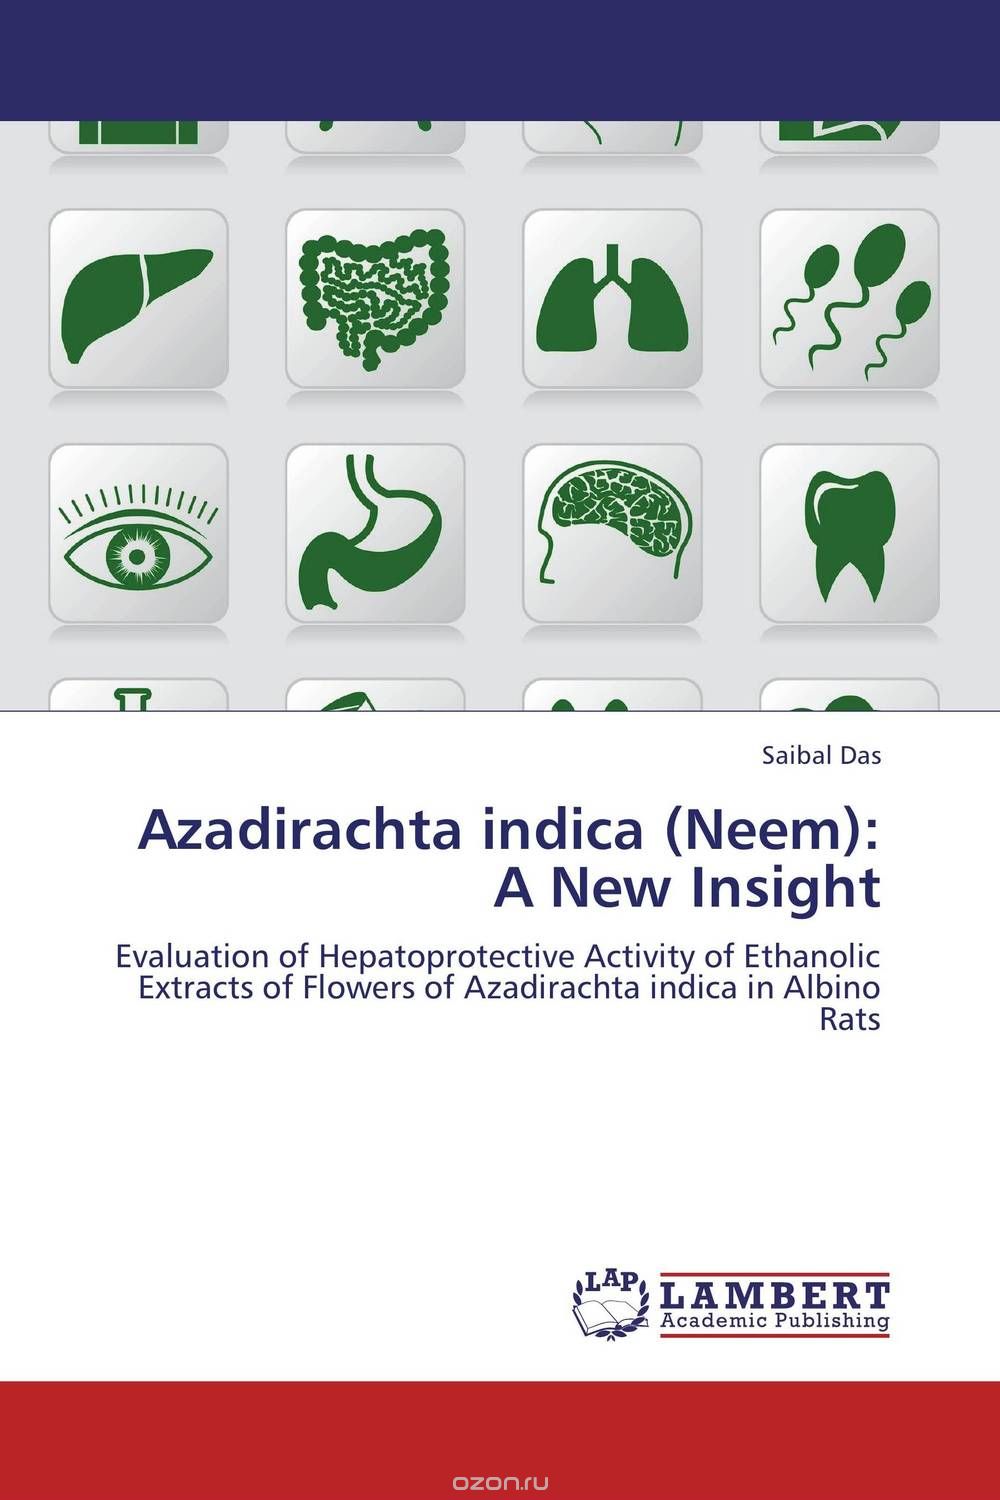 Azadirachta indica (Neem): A New Insight